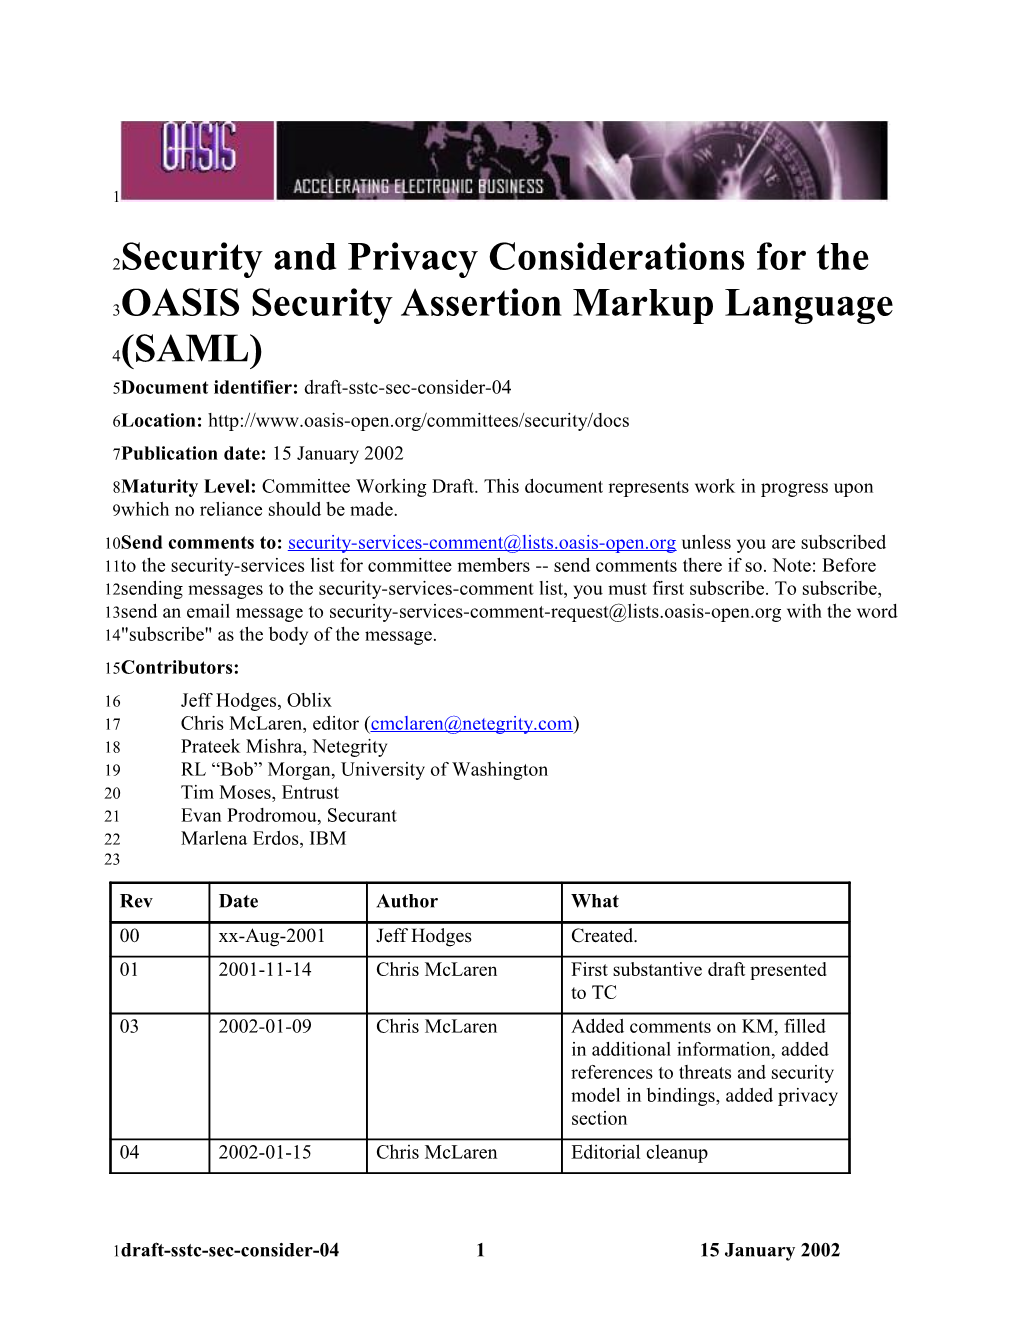 SAML Security Considerations s2